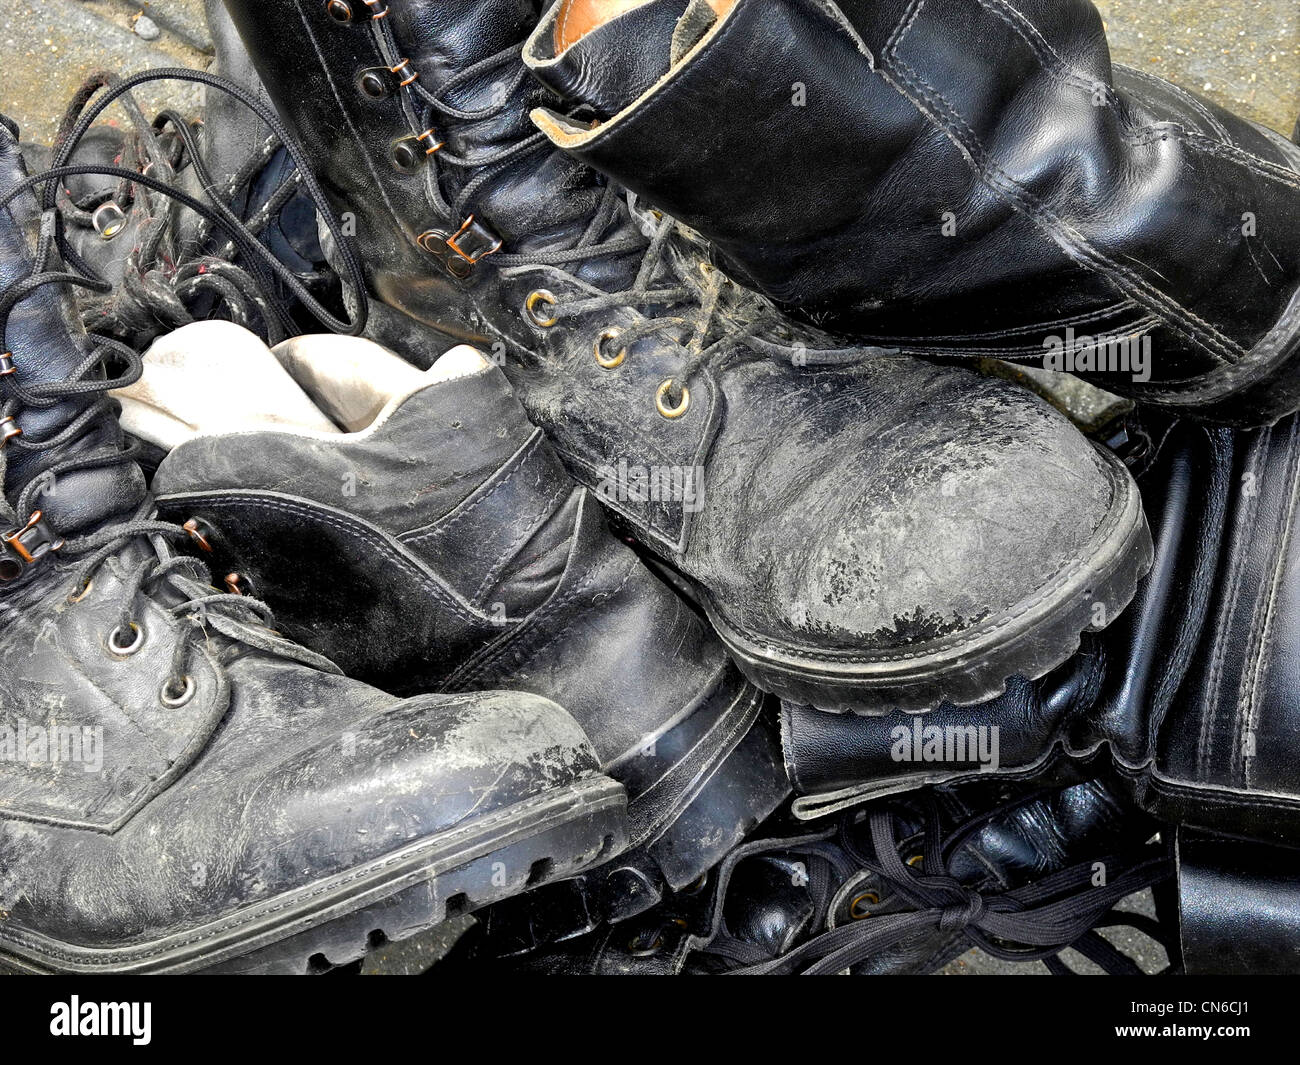 How To Clean Work Boots WD-40 | colegioclubuniversitario.edu.ar